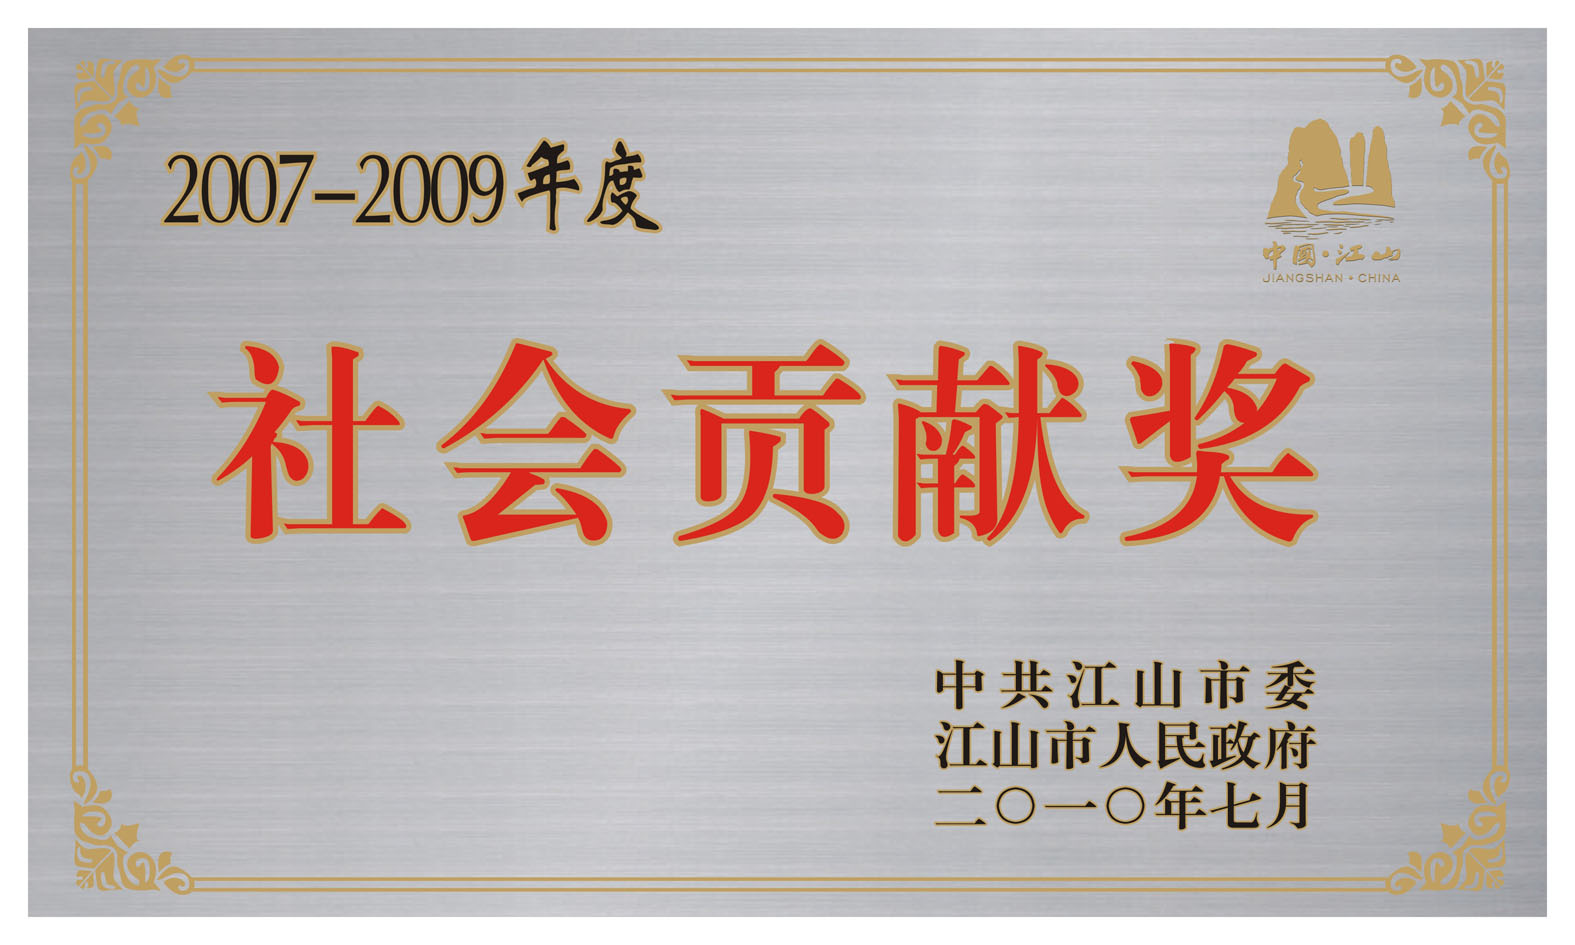 2010 Social Contribution Award